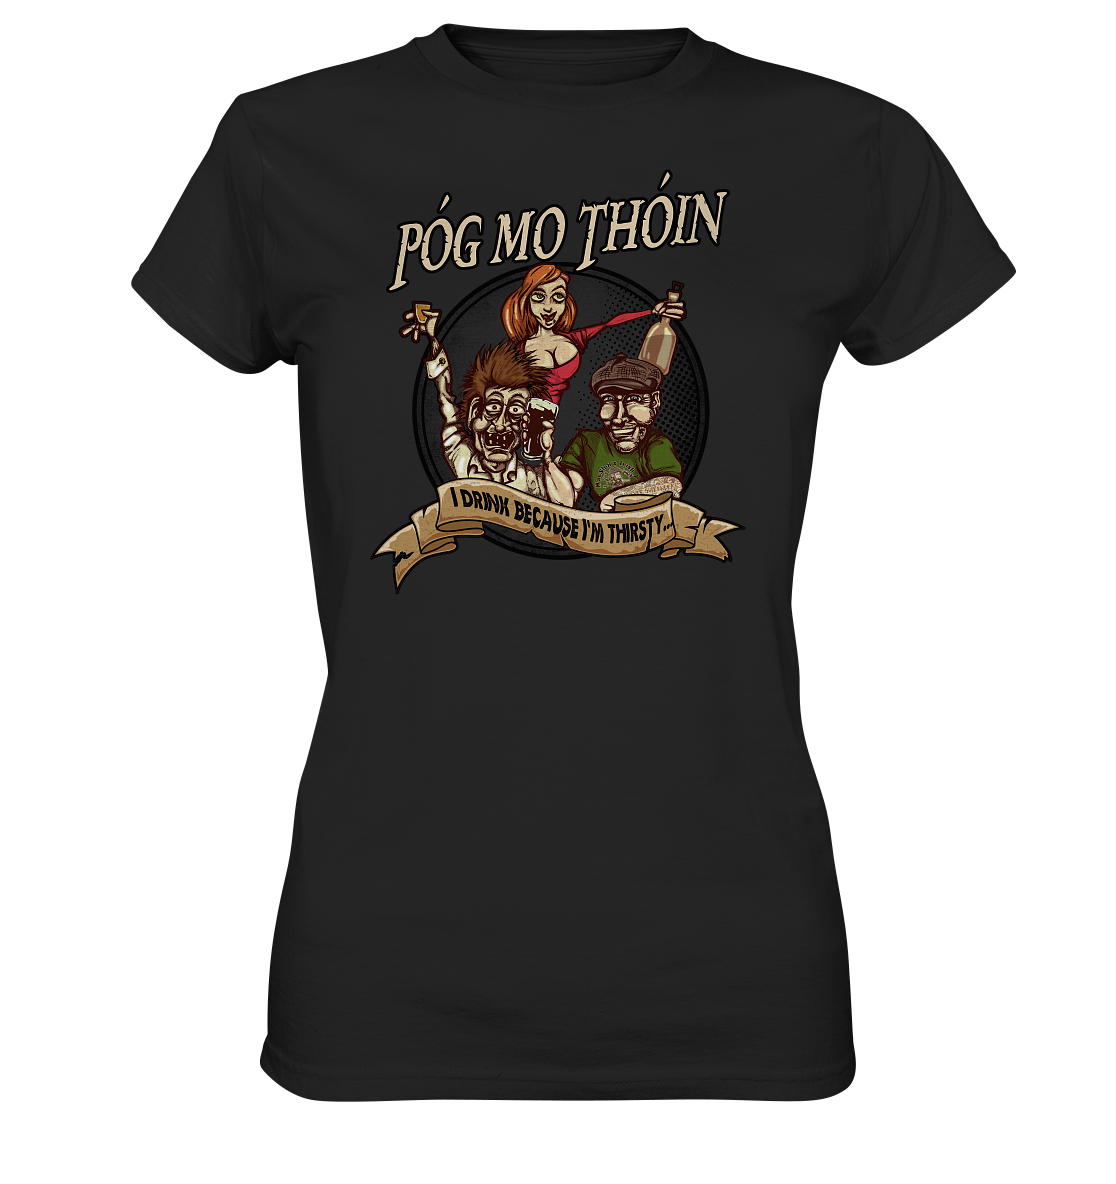 Póg Mo Thóin "I Drink Because I'm Thirsty" - Ladies Premium Shirt